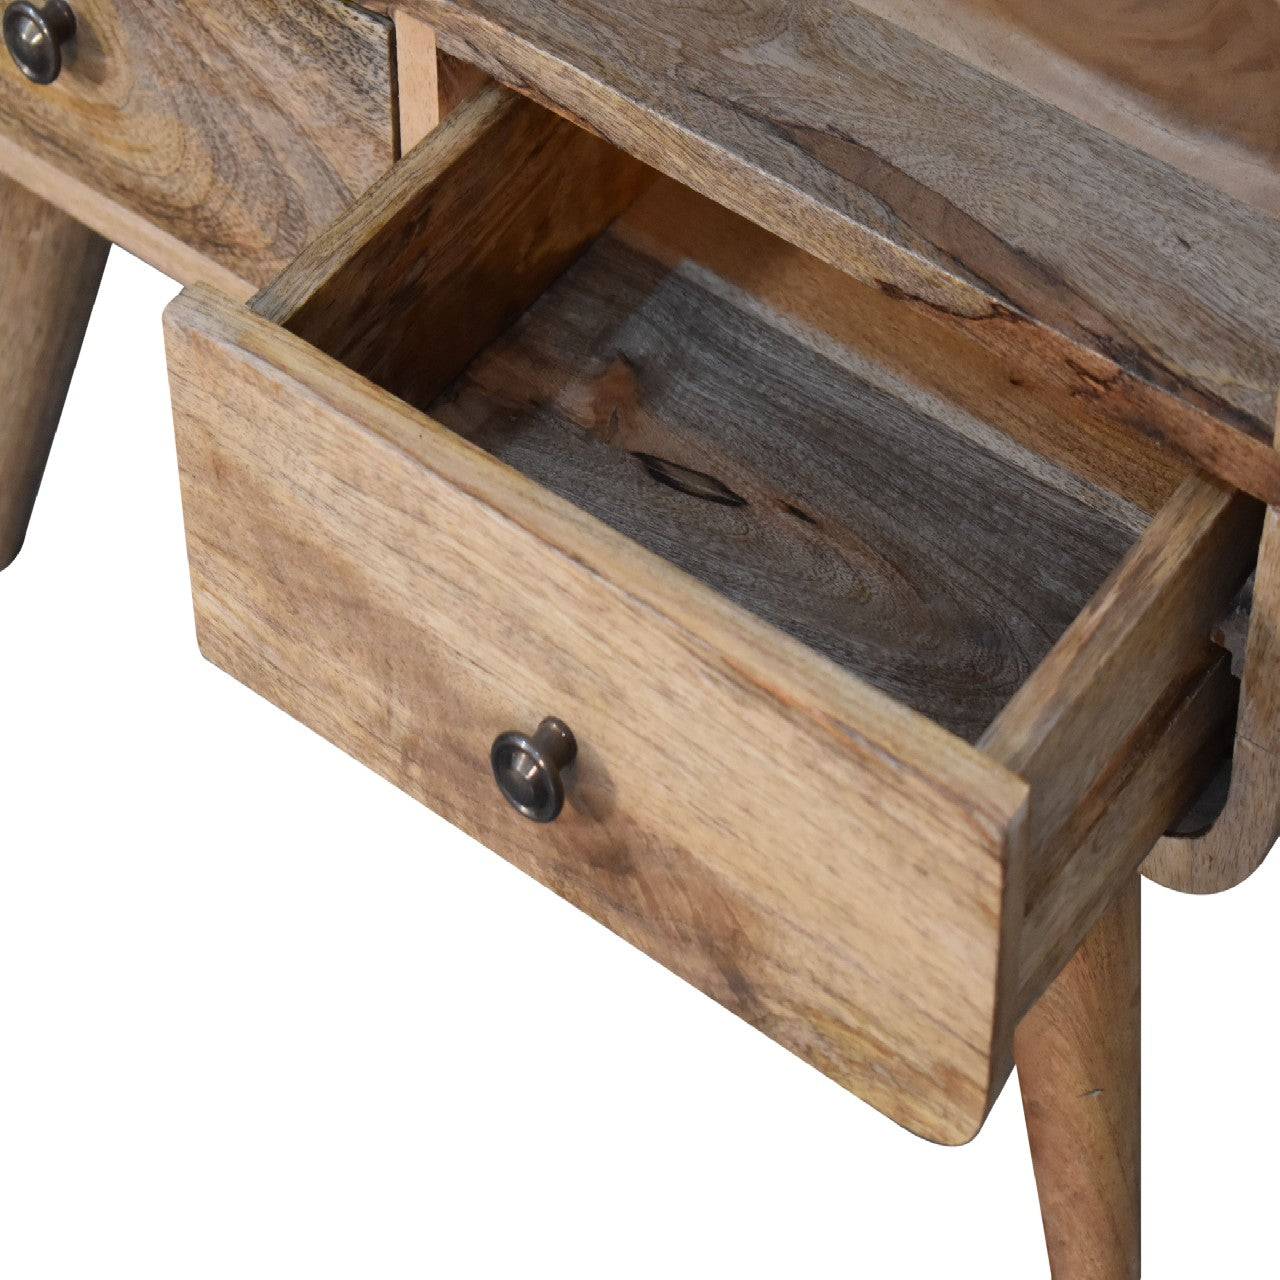 Modal handmade 2 drawer small wooden tv stand in natural oak-ish finish | malletandplane.com